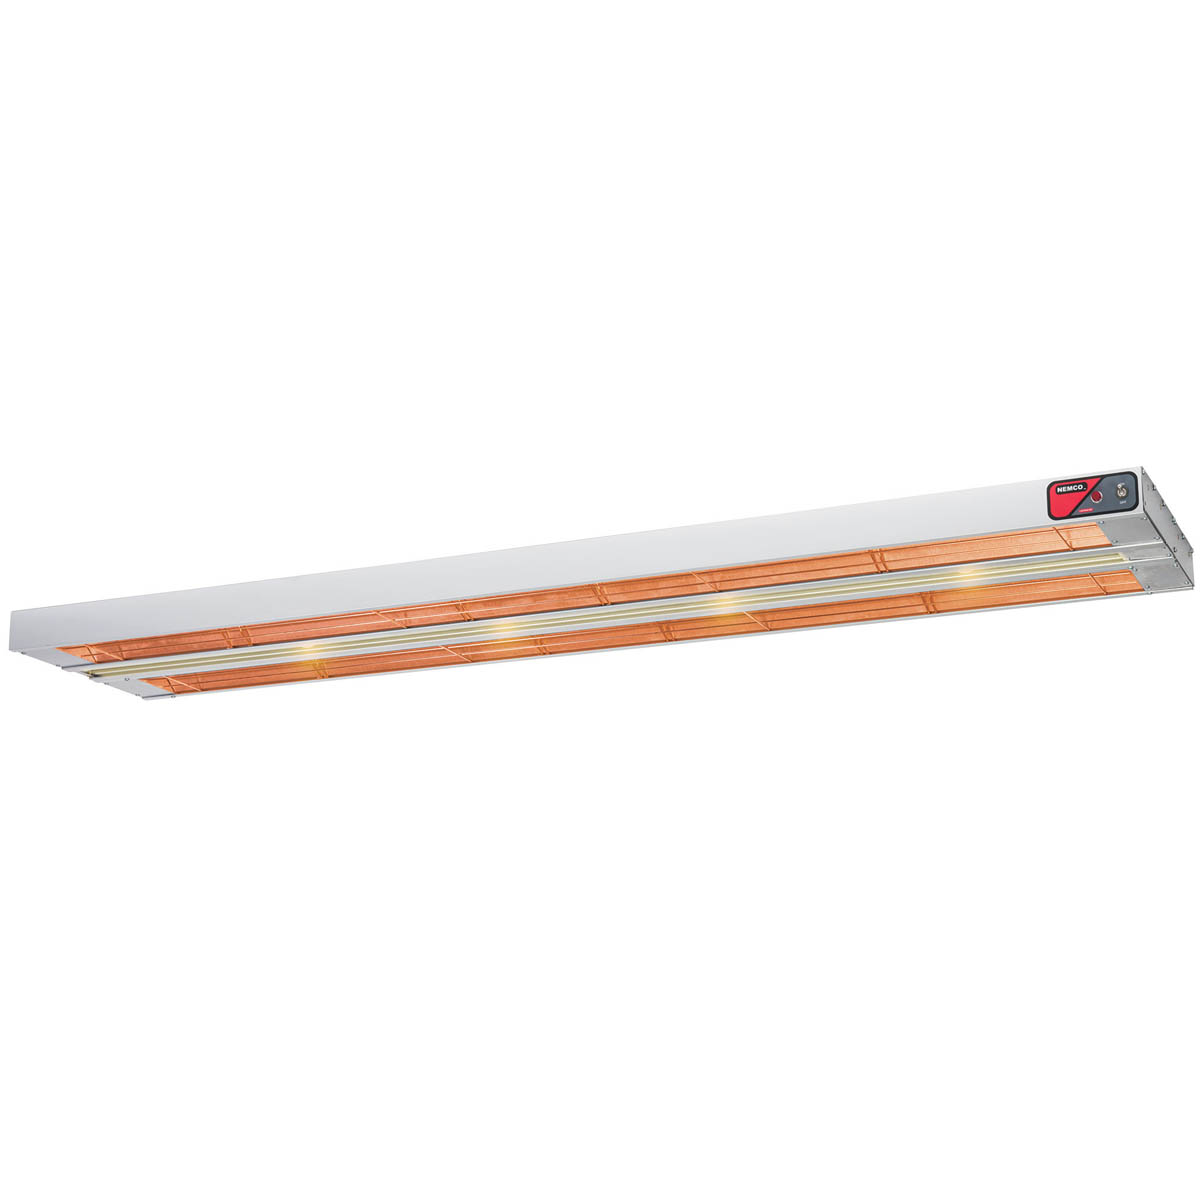 Nemco 6150-48-DL-208 Strip Type Heat Lamp